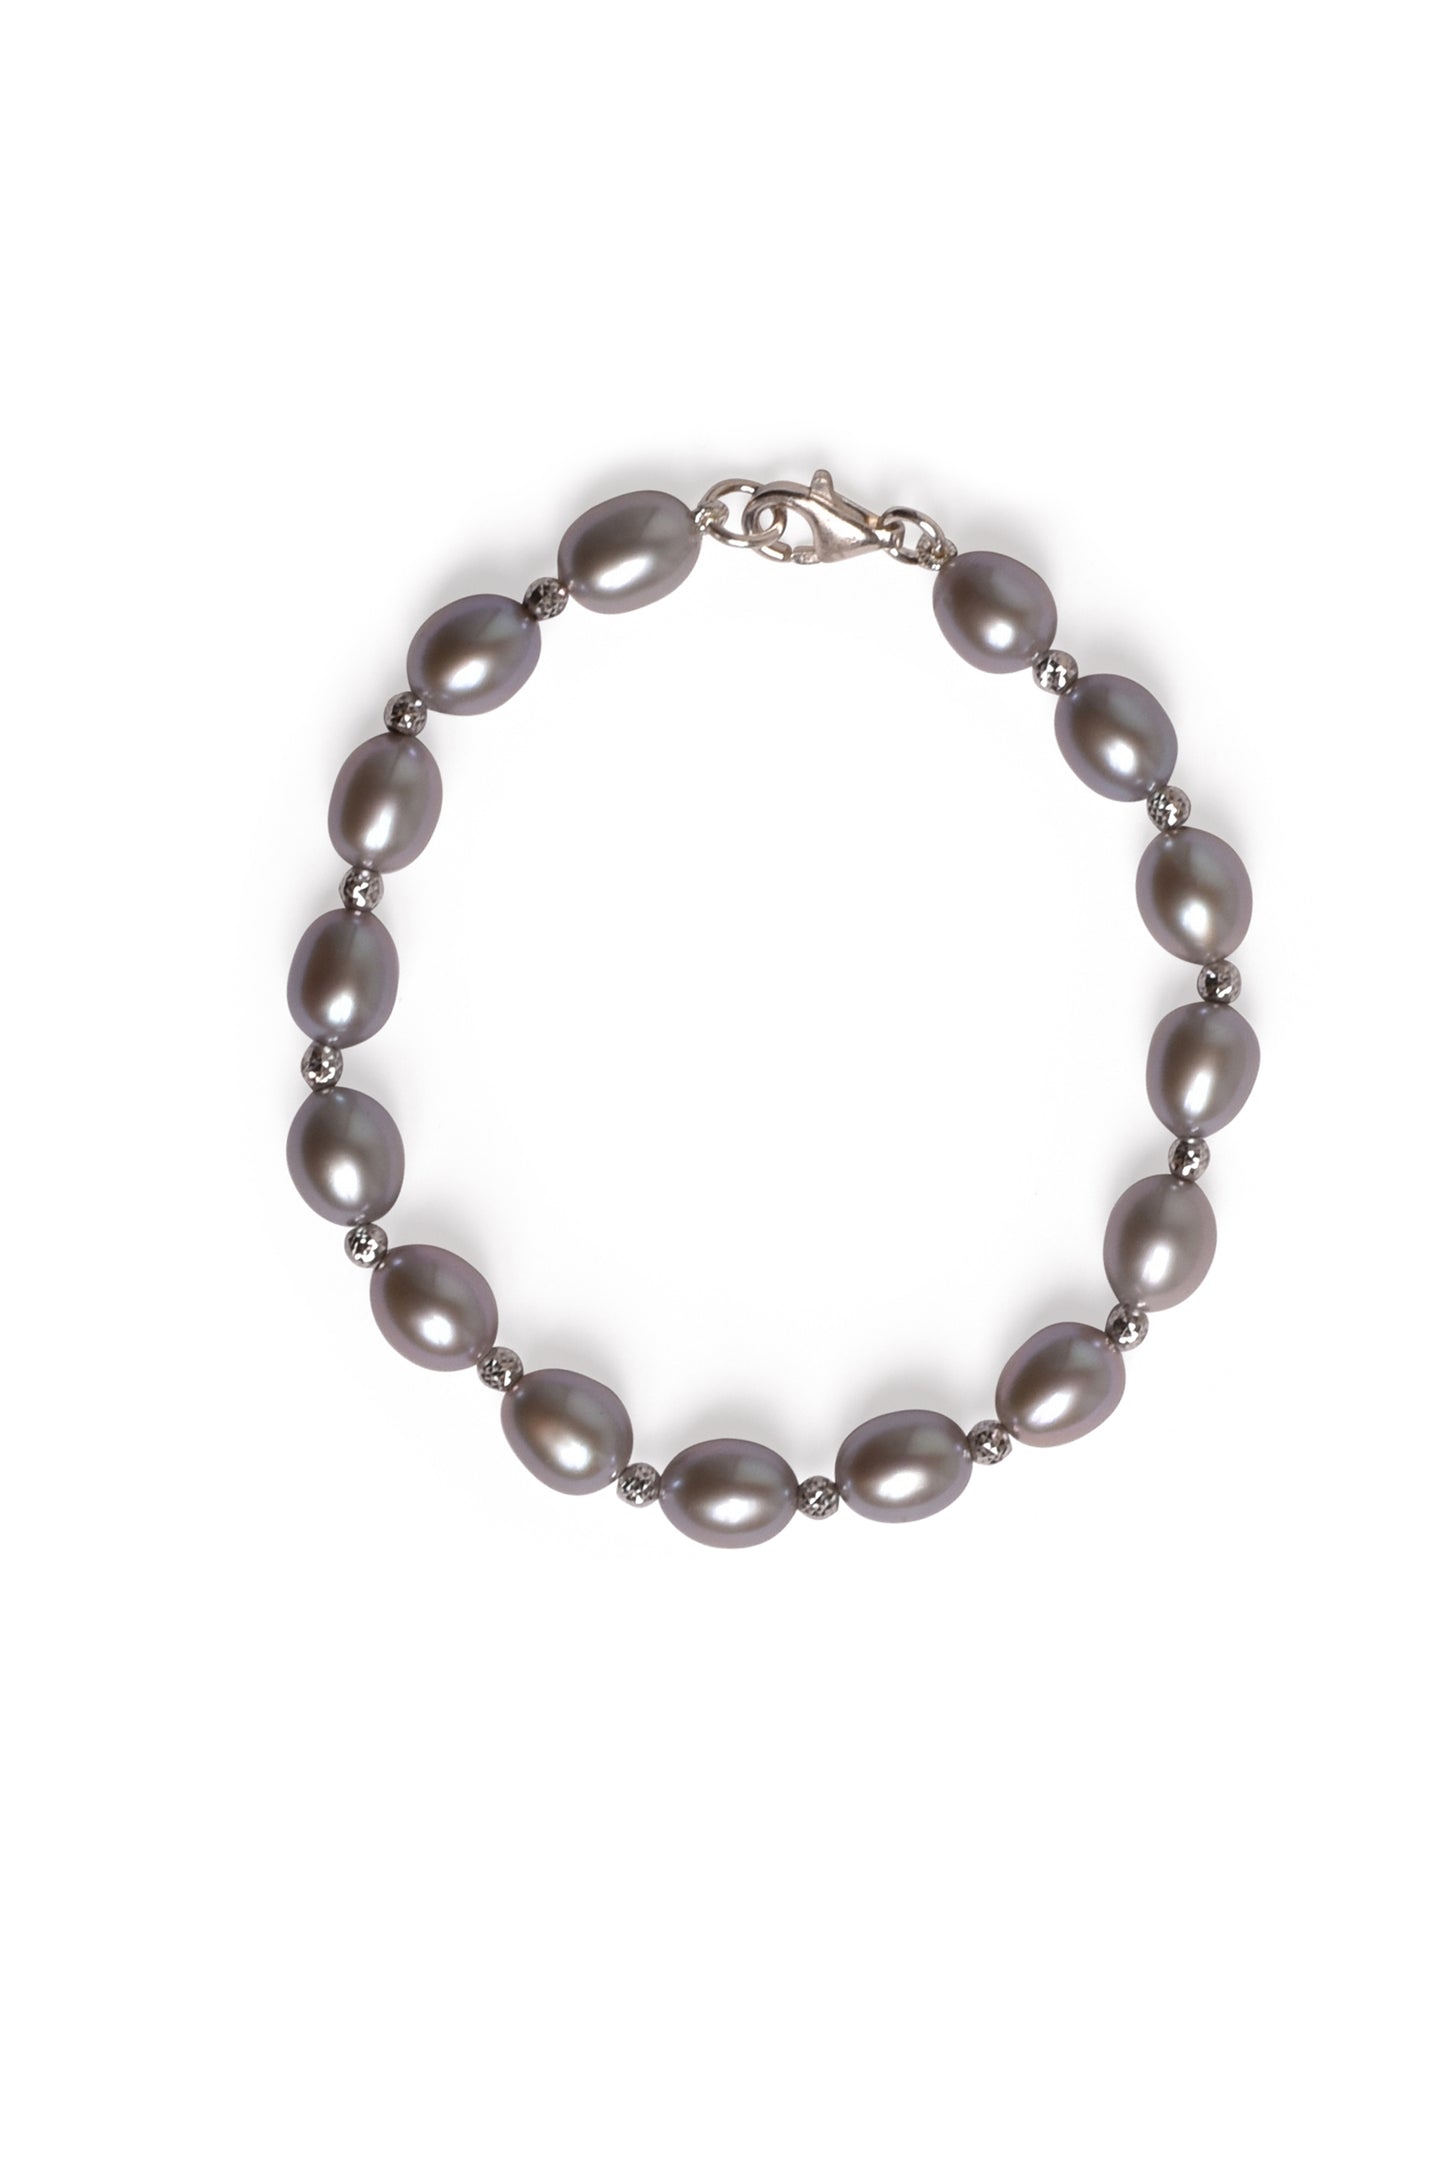 Sterling Silver Grey or White Freshwater Pearl Bracelet 7.5" Grey